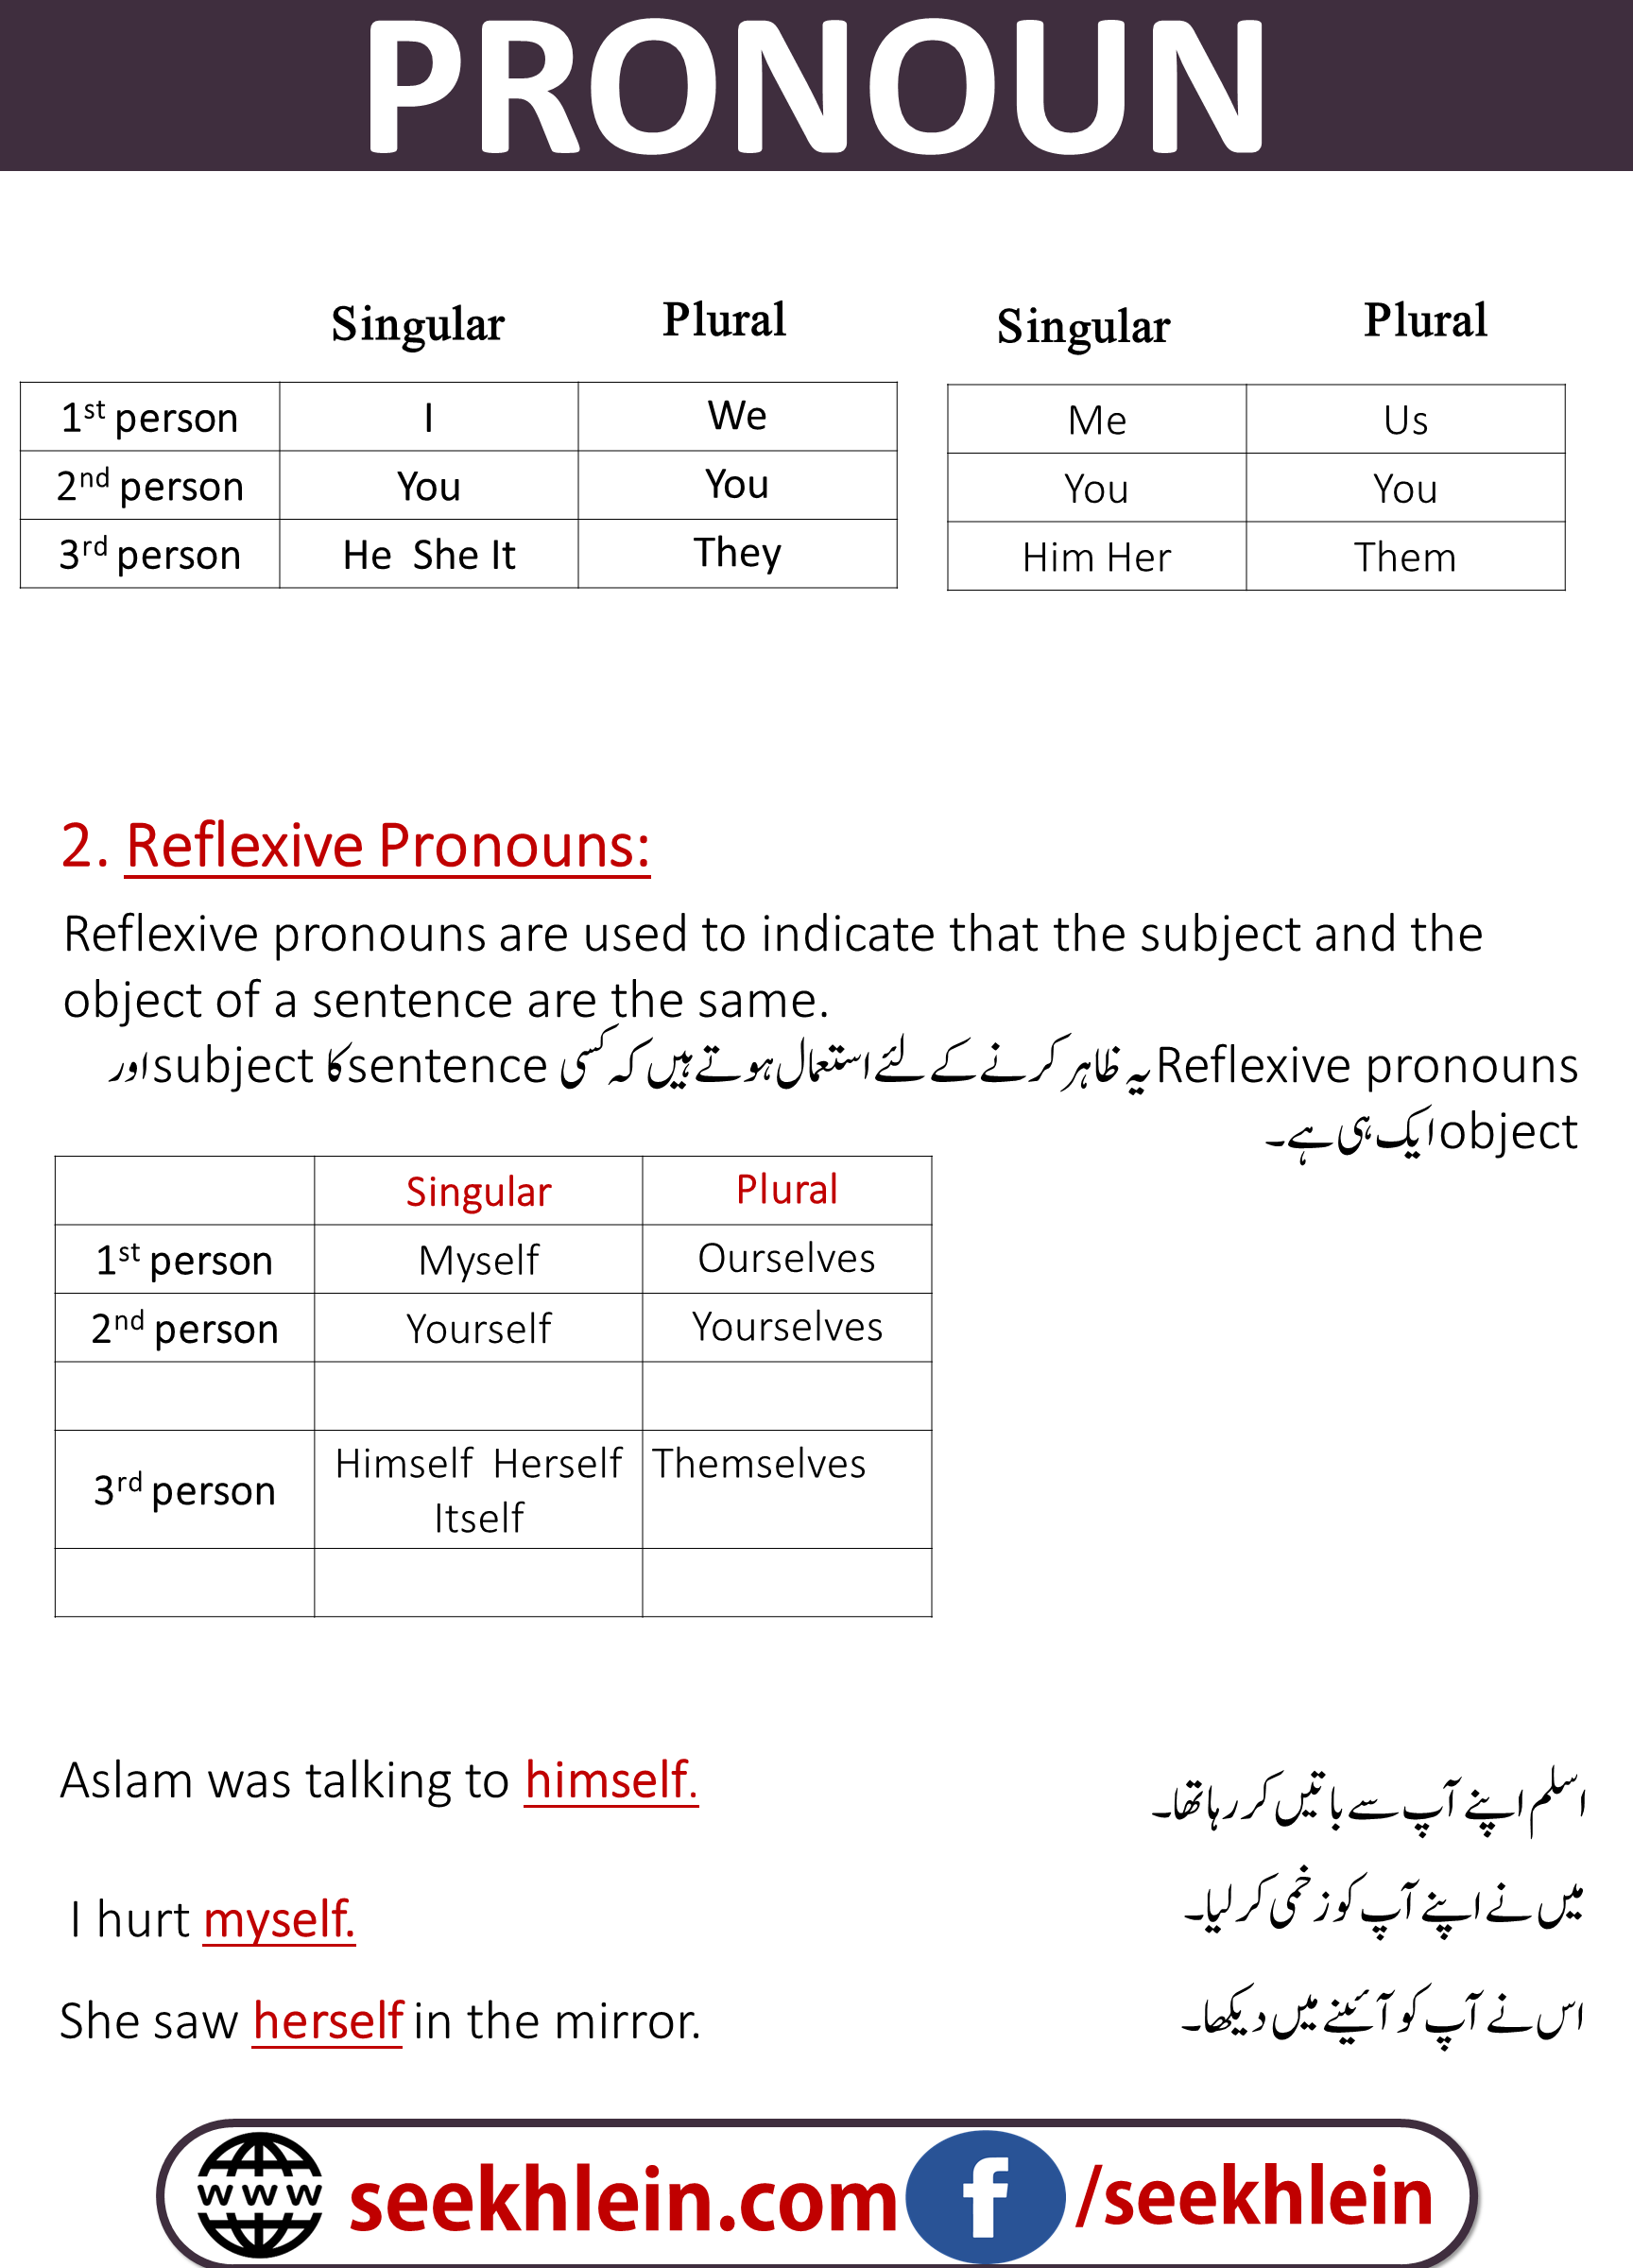 Pronoun Examples In A Sentence  Reflexive Pronouns